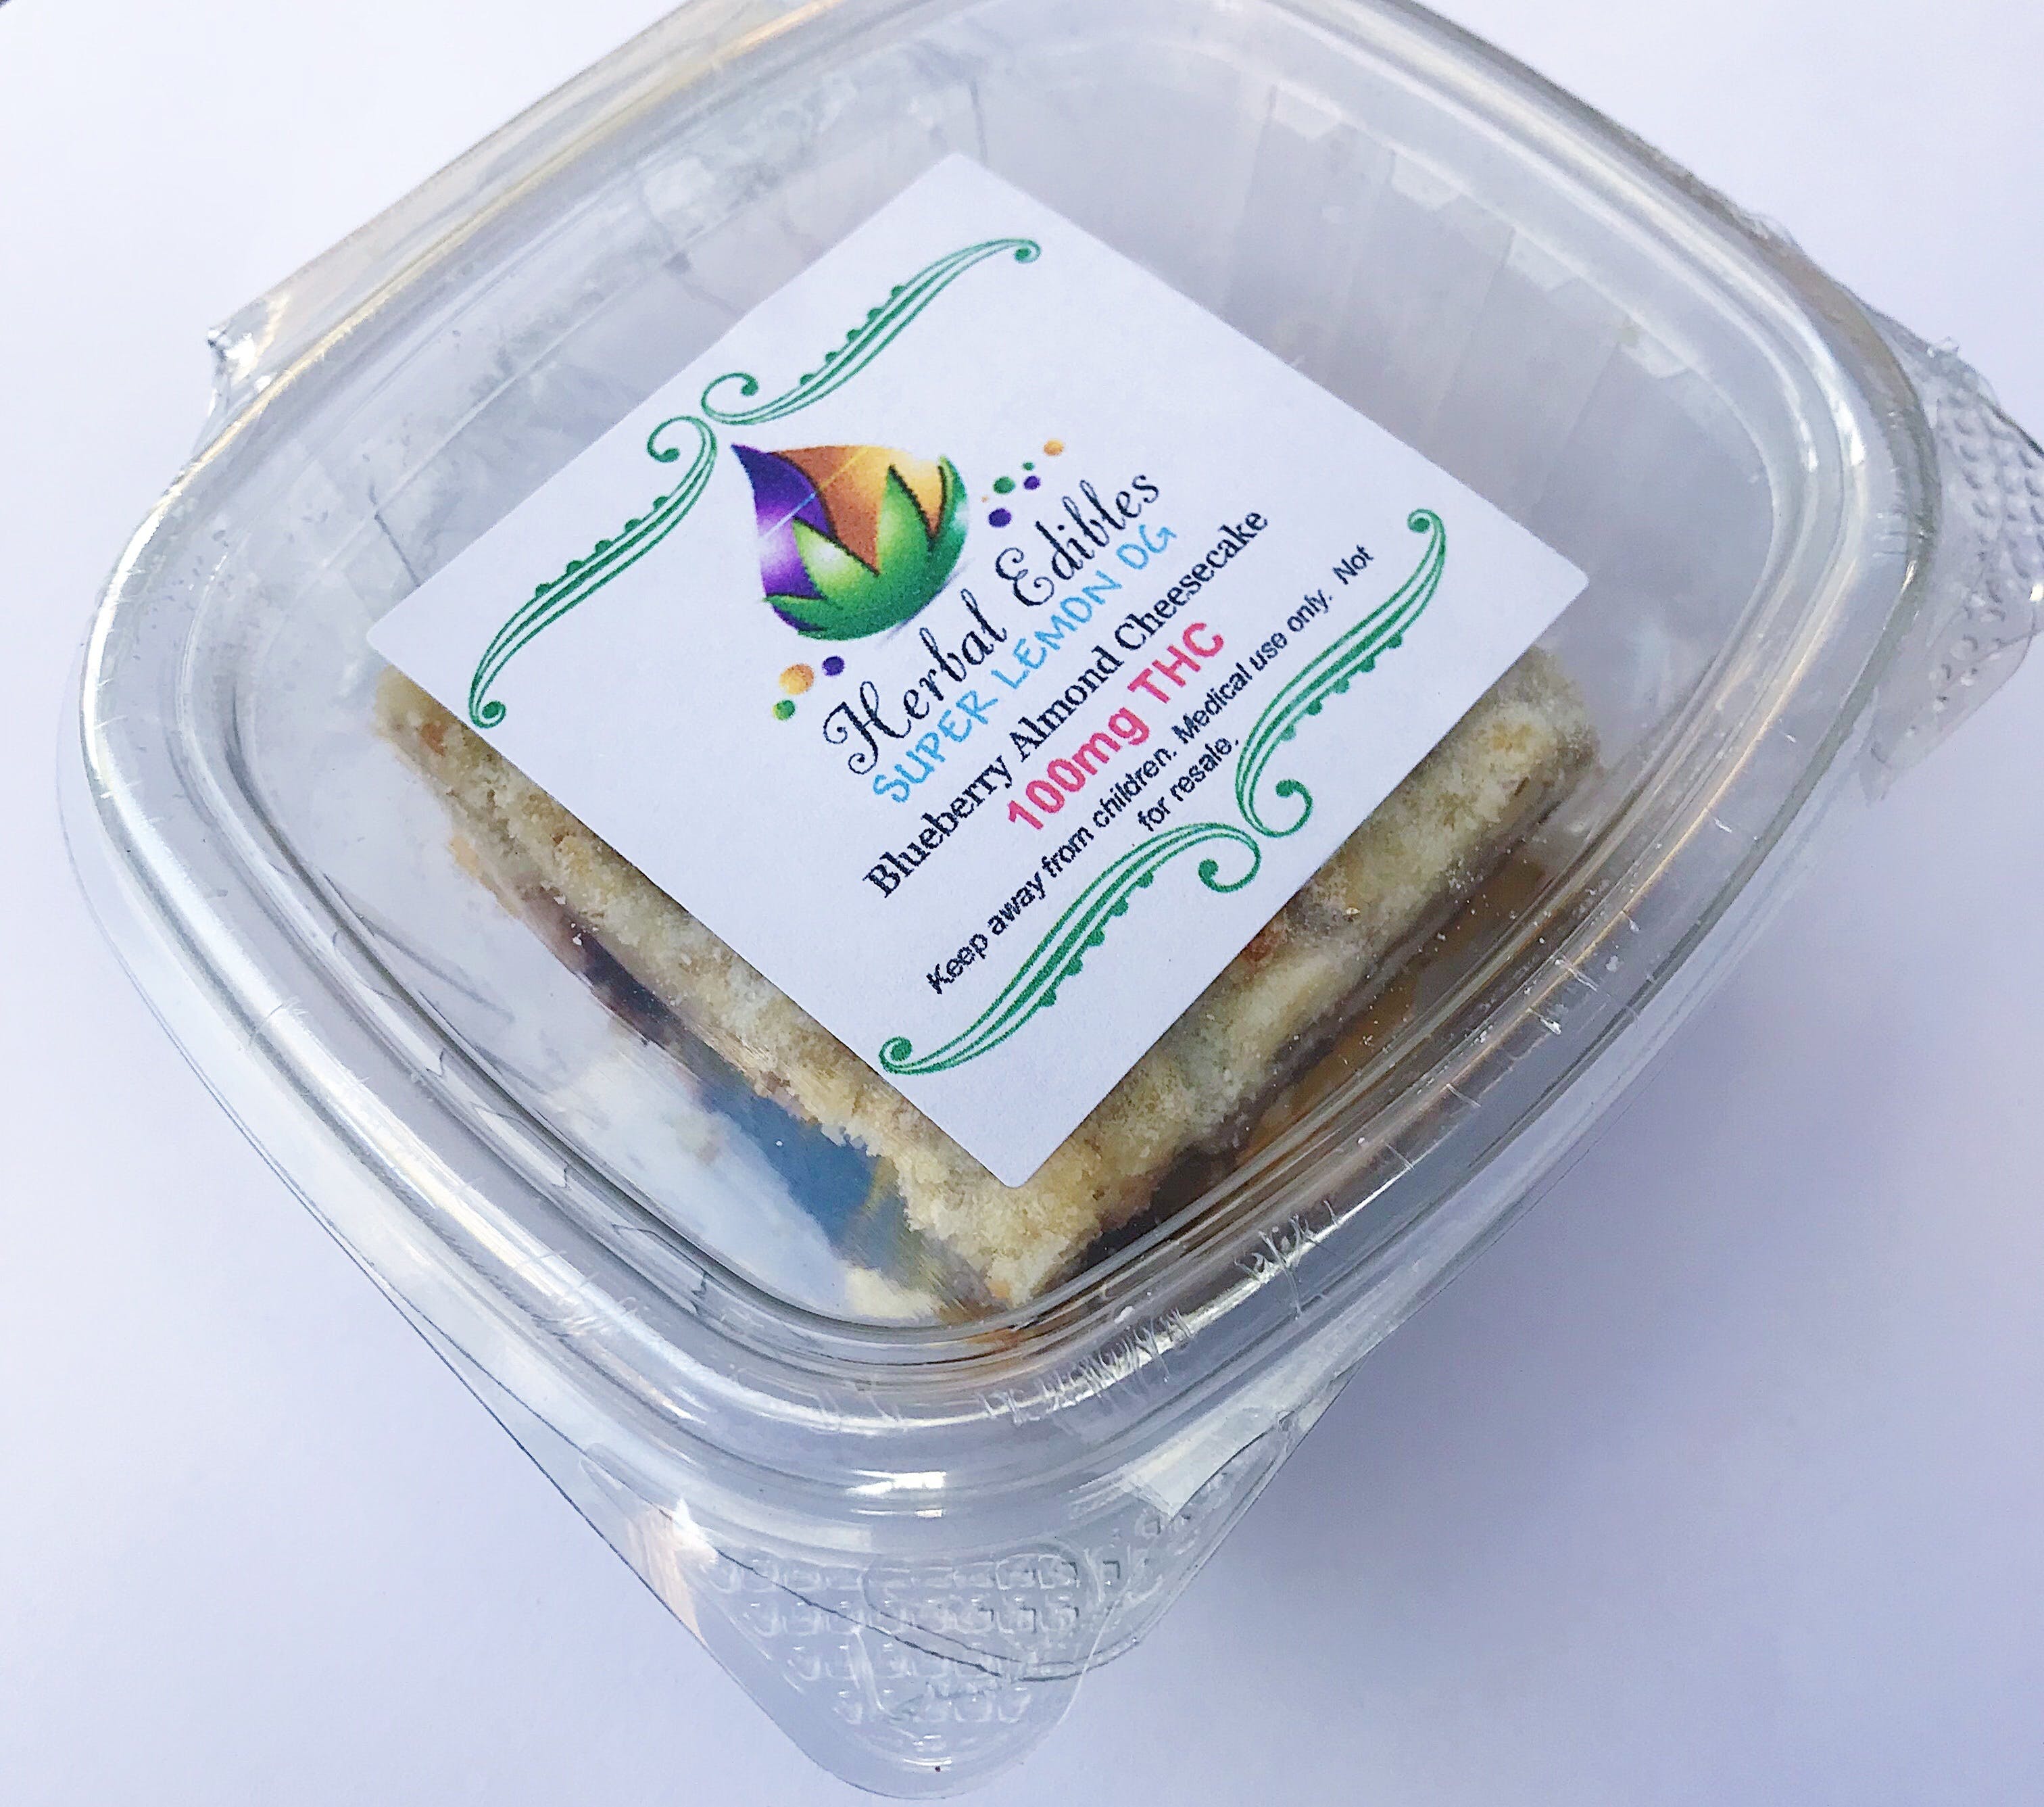 edible-herbal-edibles-blueberry-almond-cheesecake-100mg